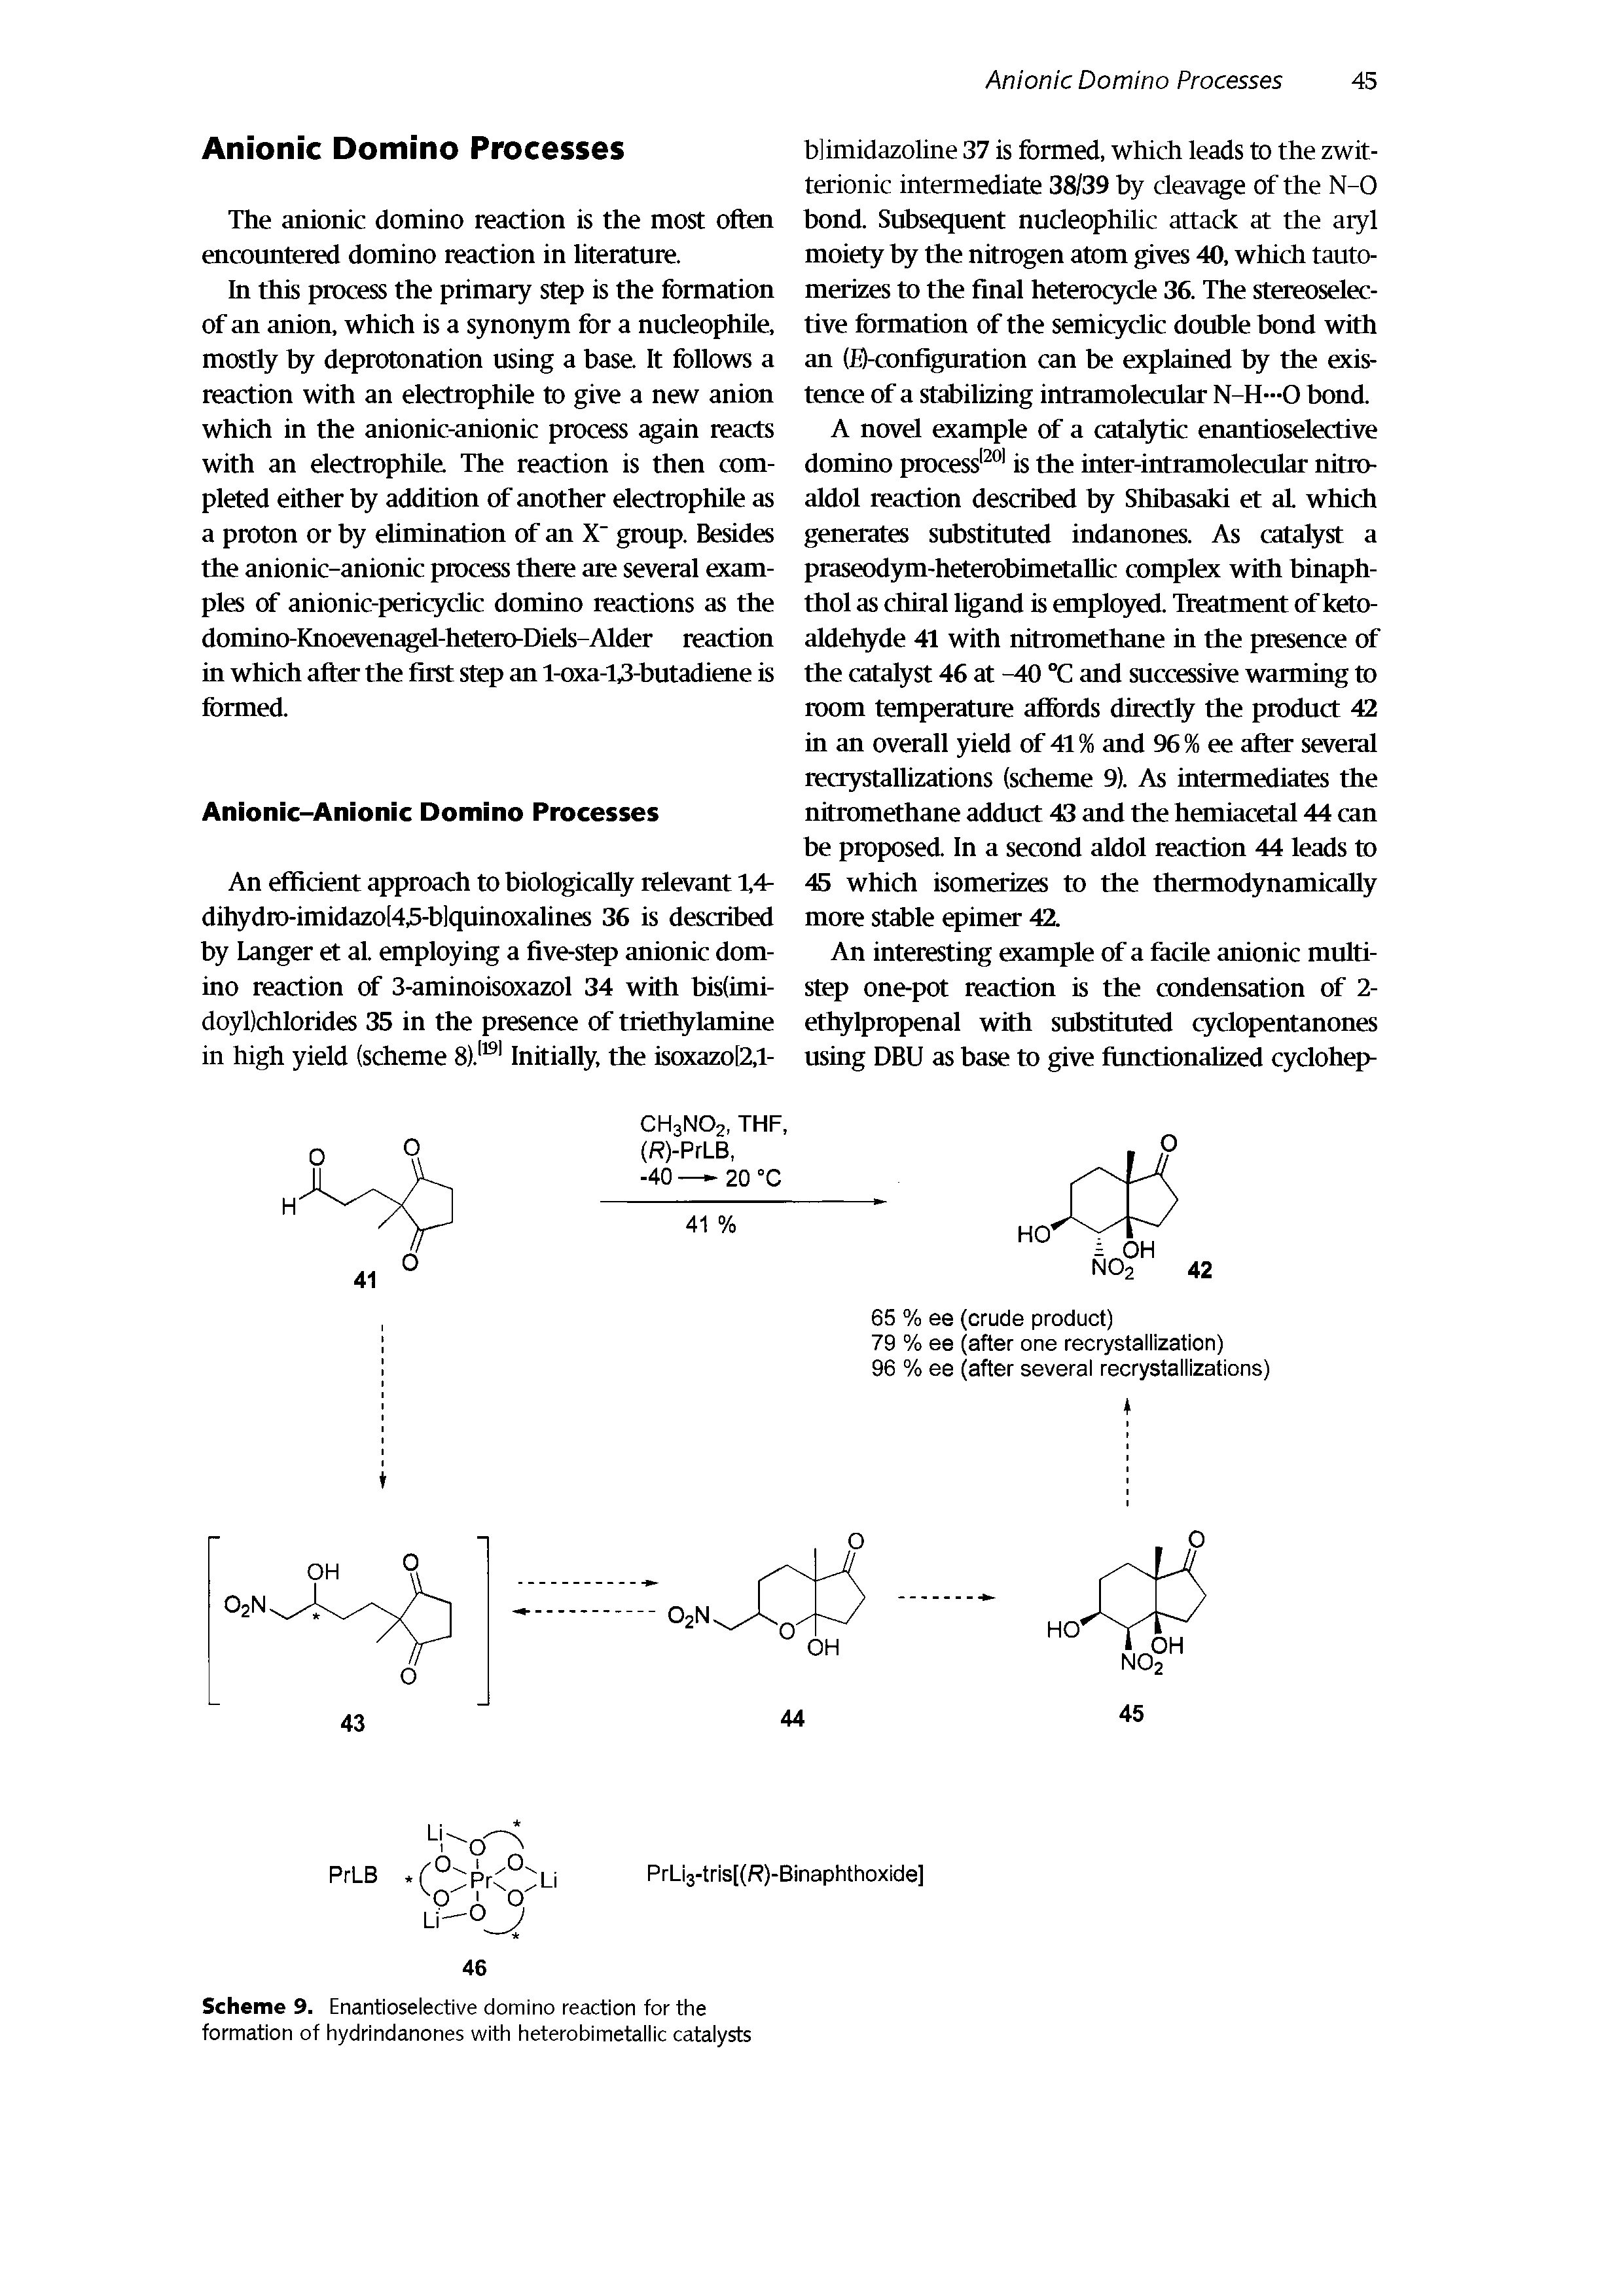 Scheme 9. Enantioselective domino reaction for the formation of hydrindanones with heterobimetallic catalysts...